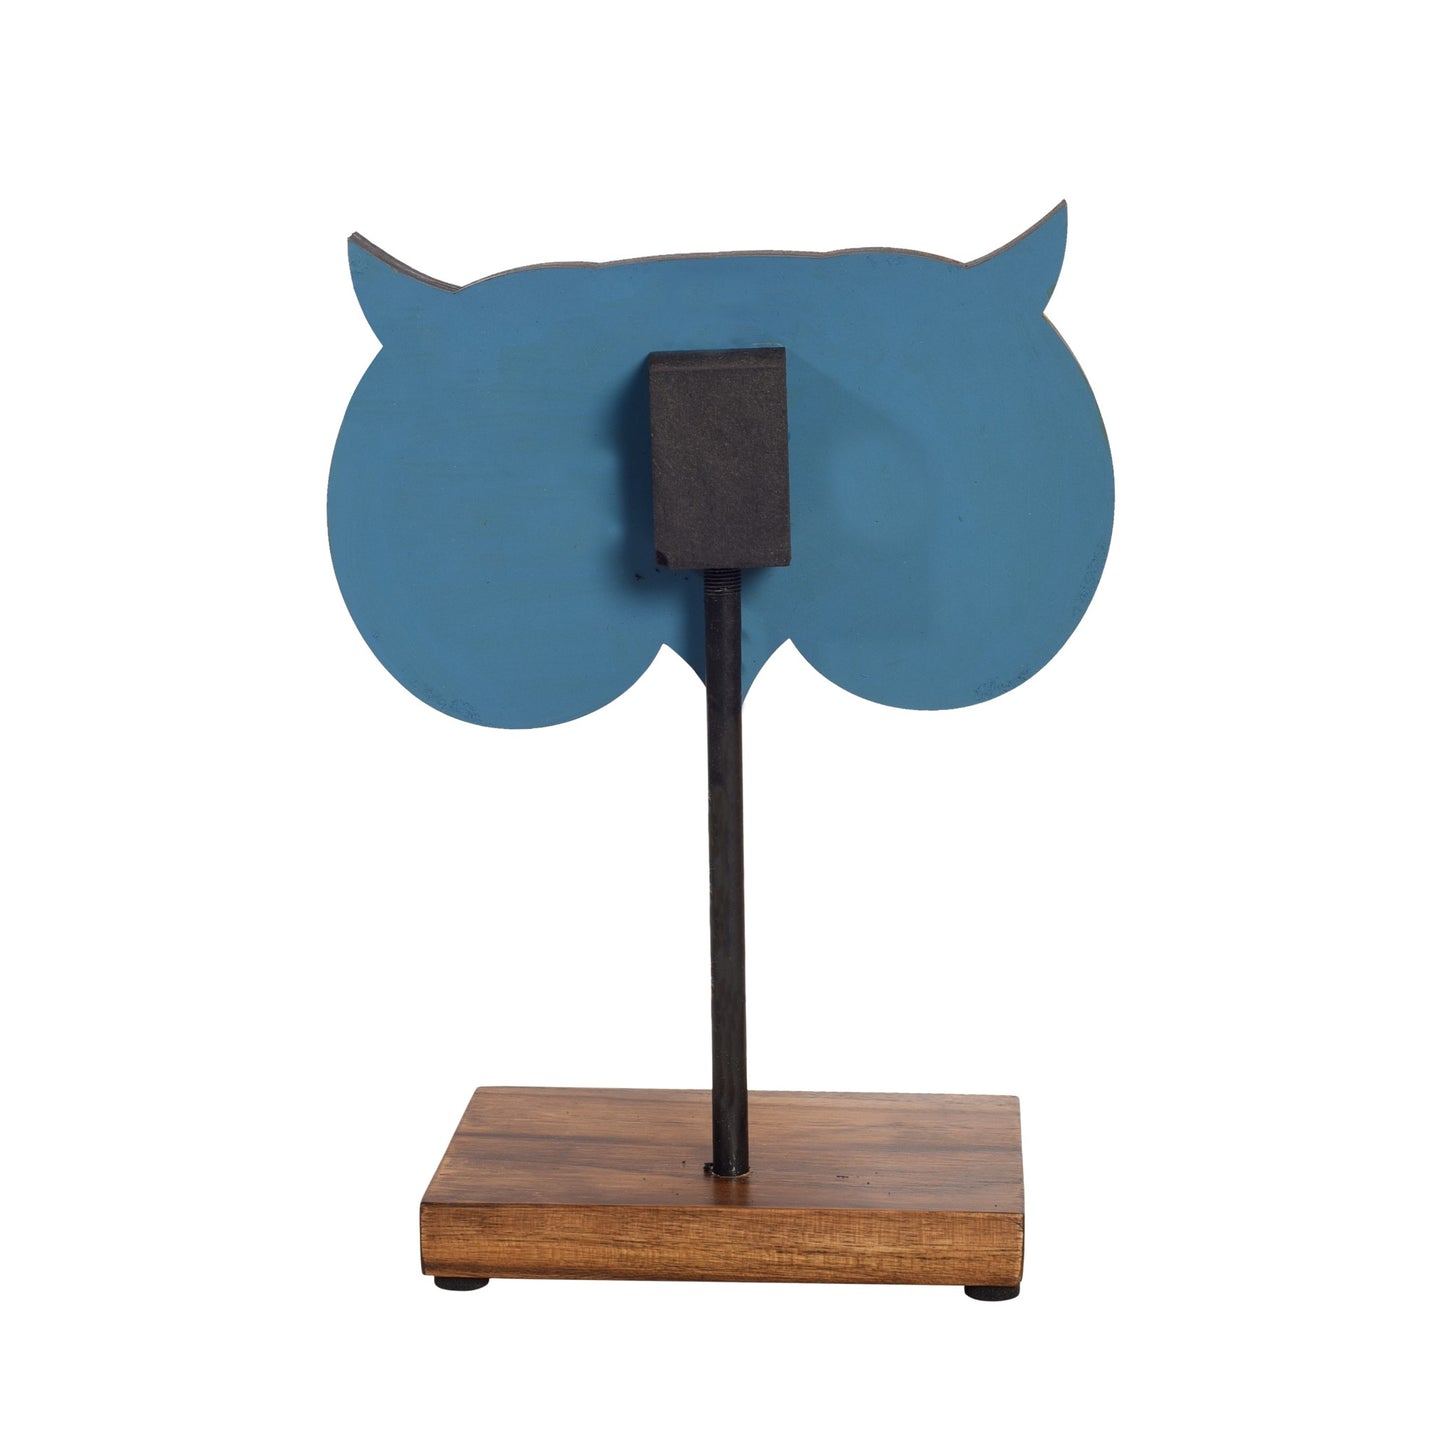 Owl's Eye Table Decor Mask Stand